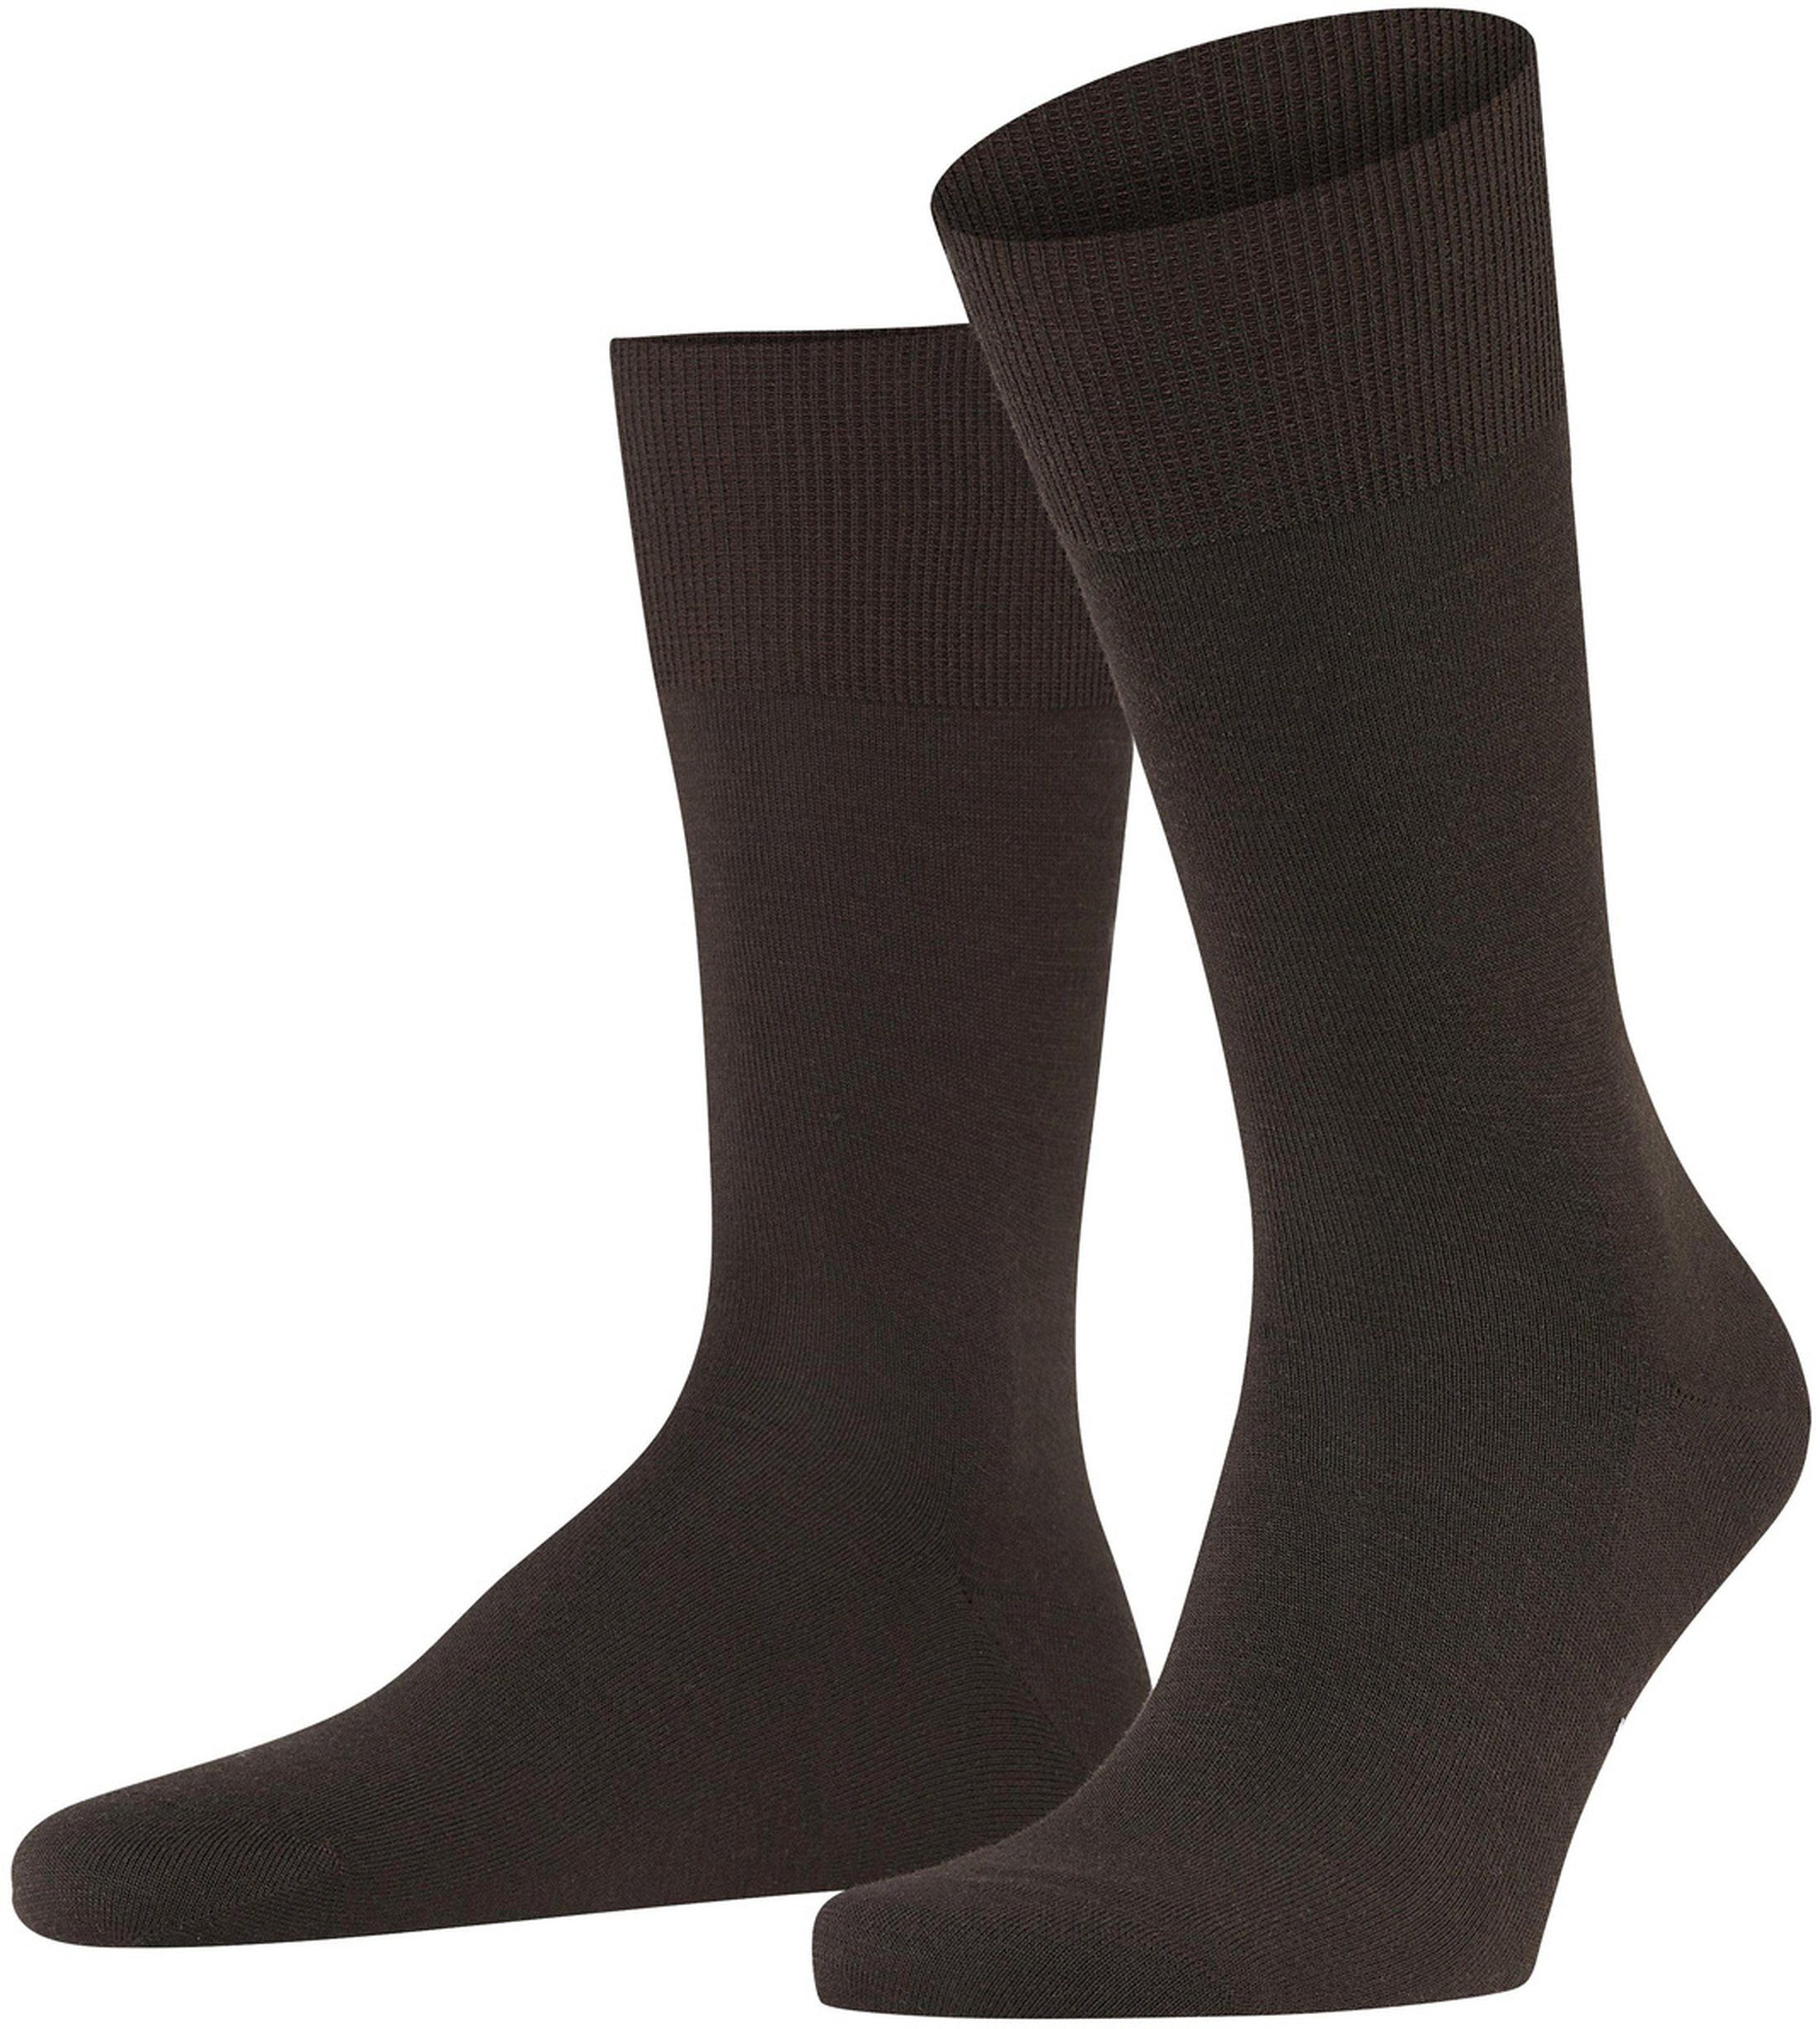 Falke Airport Socks 5930 Brown size 39-40